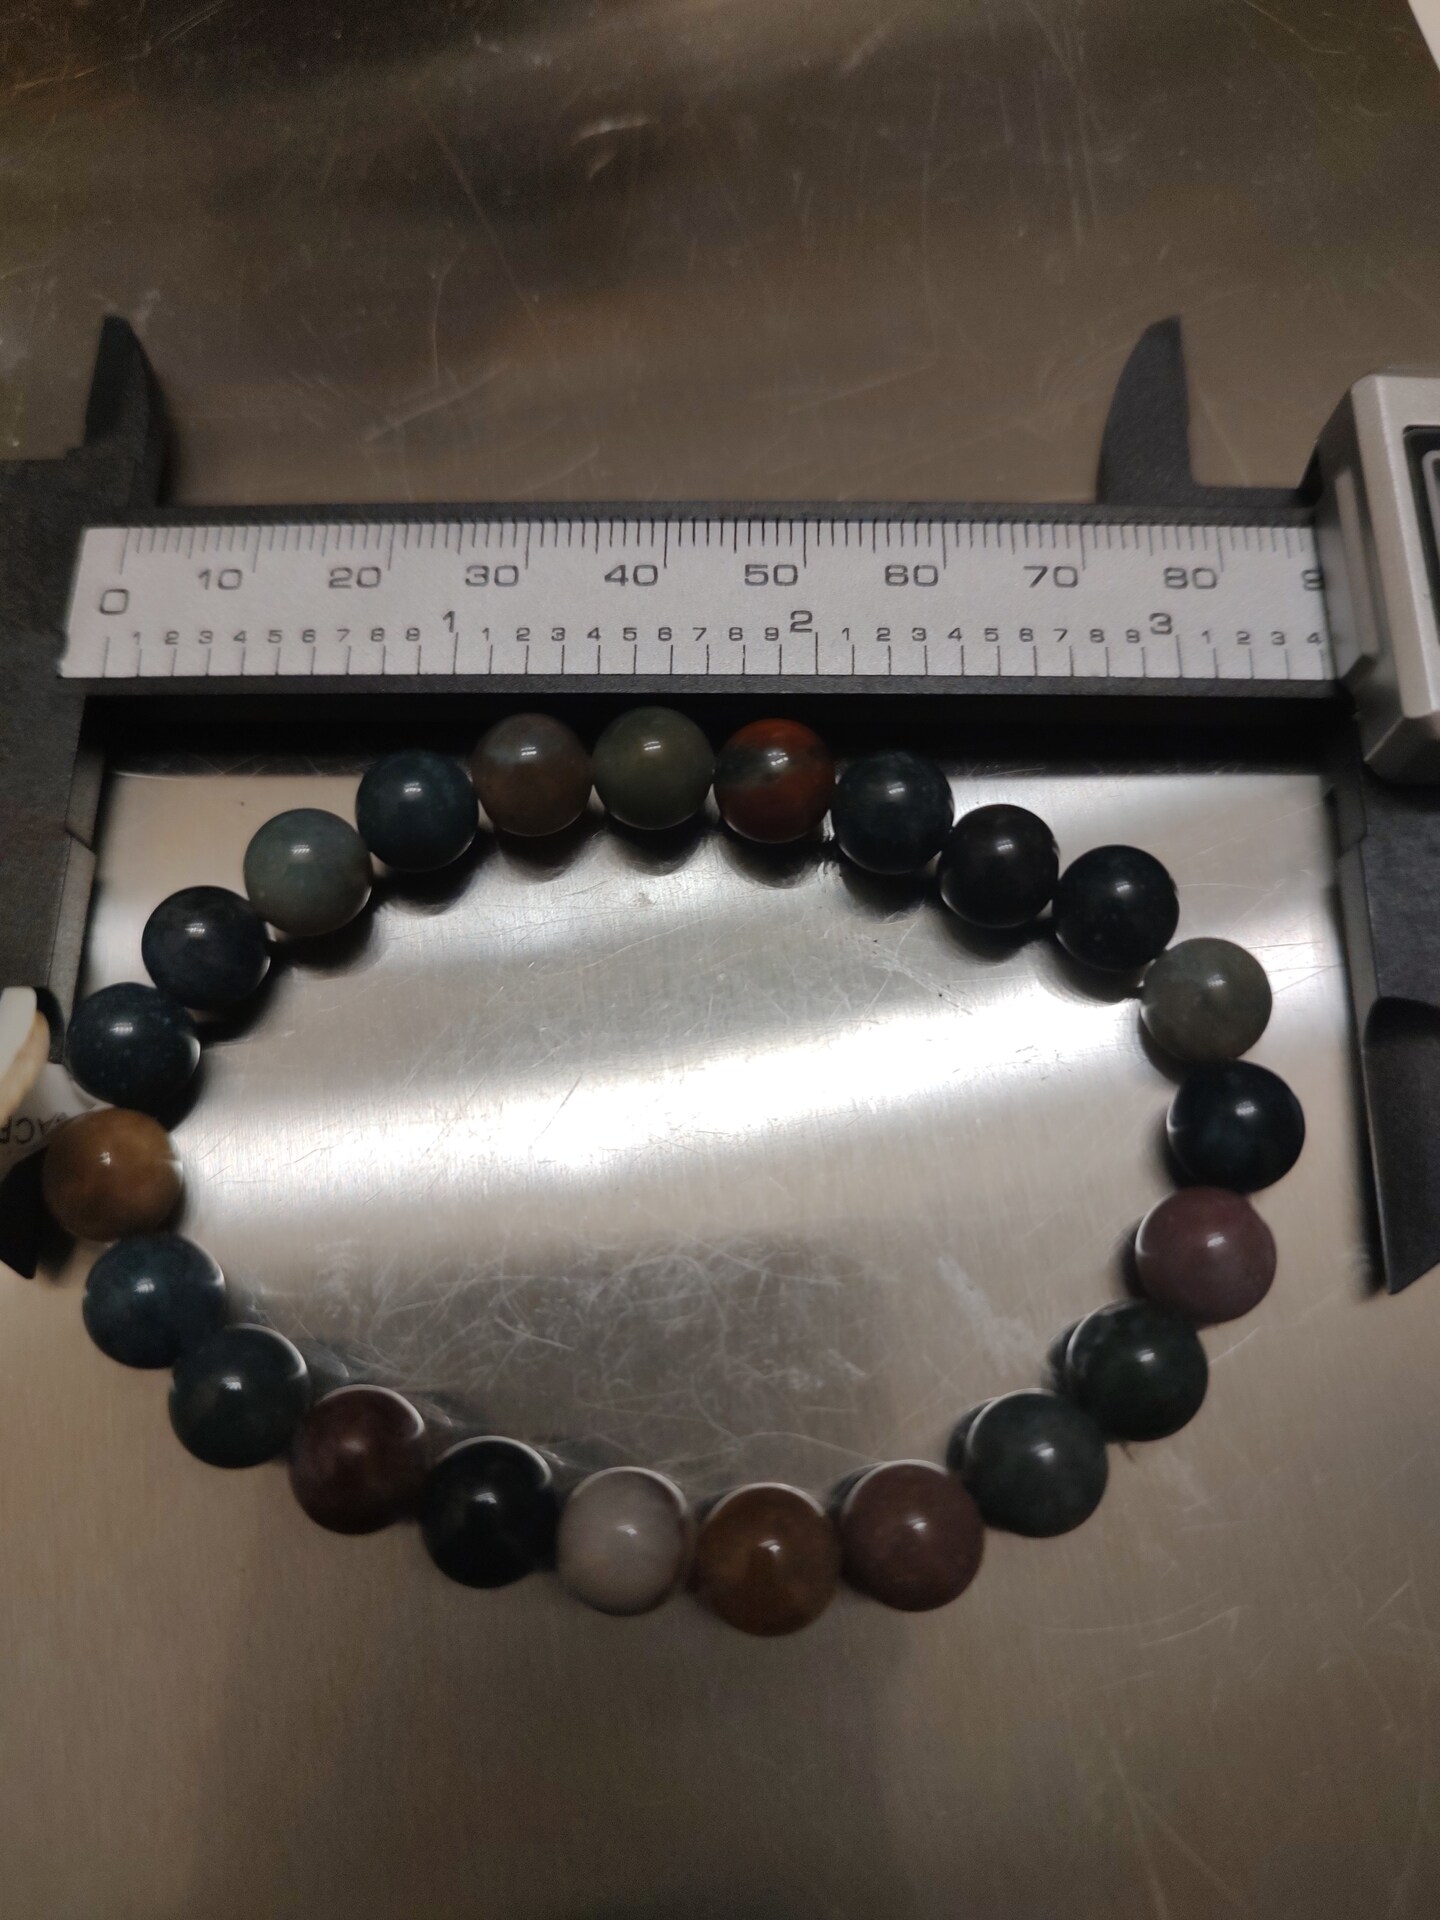 Handmade beaded bracelet elastic gemstone round bead